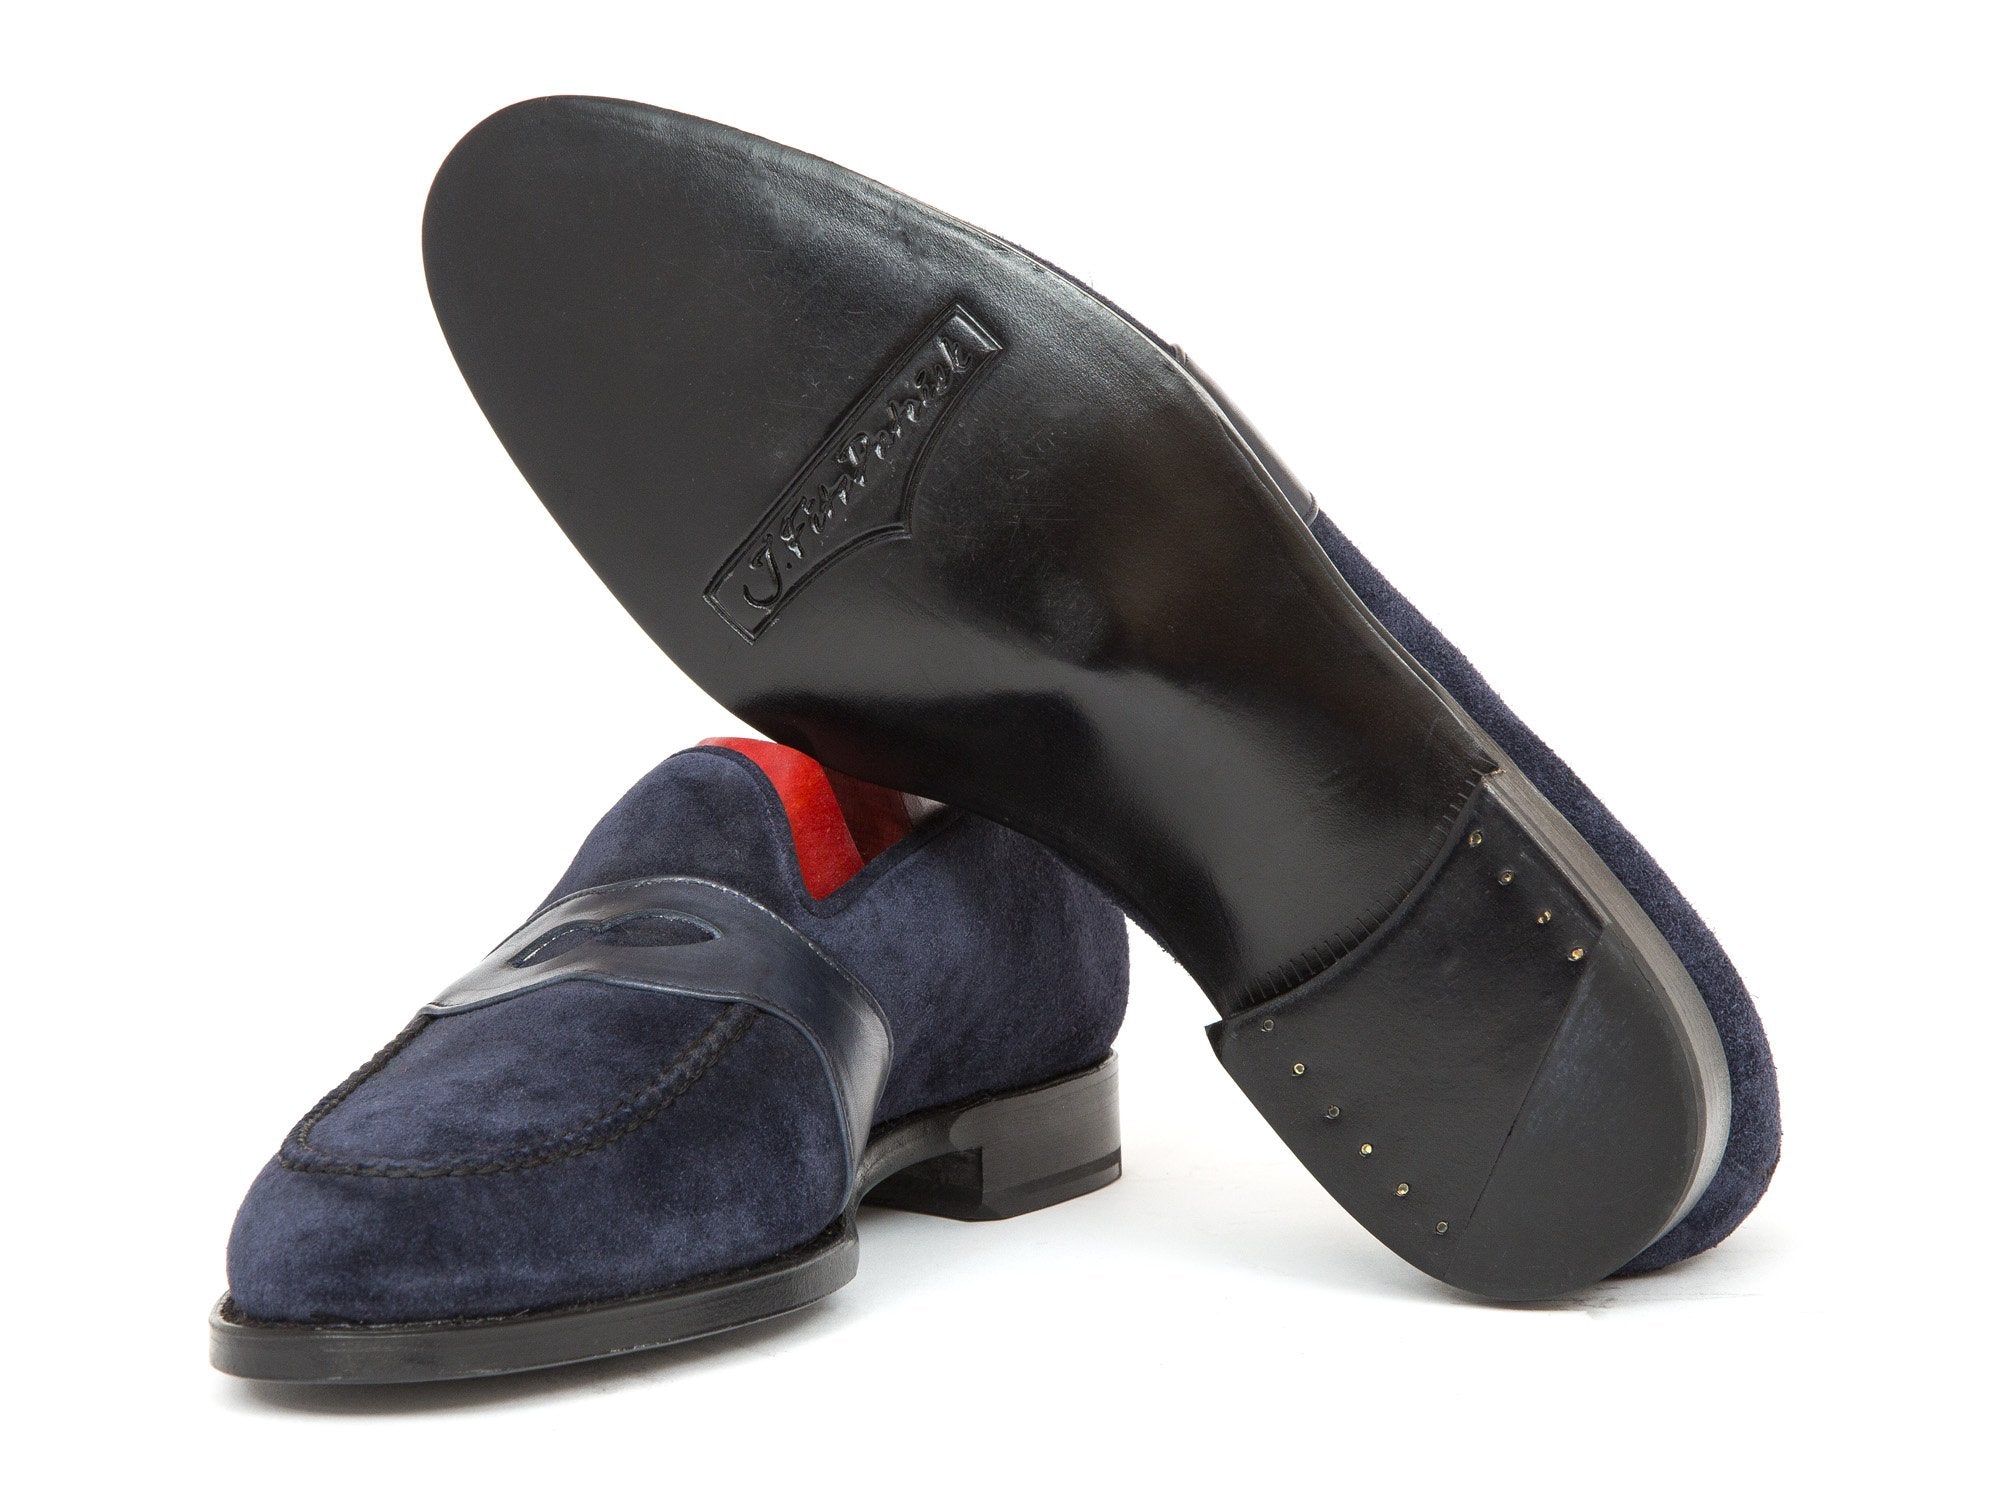 J.FitzPatrick Footwear - Madison - Navy Suede / Shaded Navy Calf Strap - TMG Last